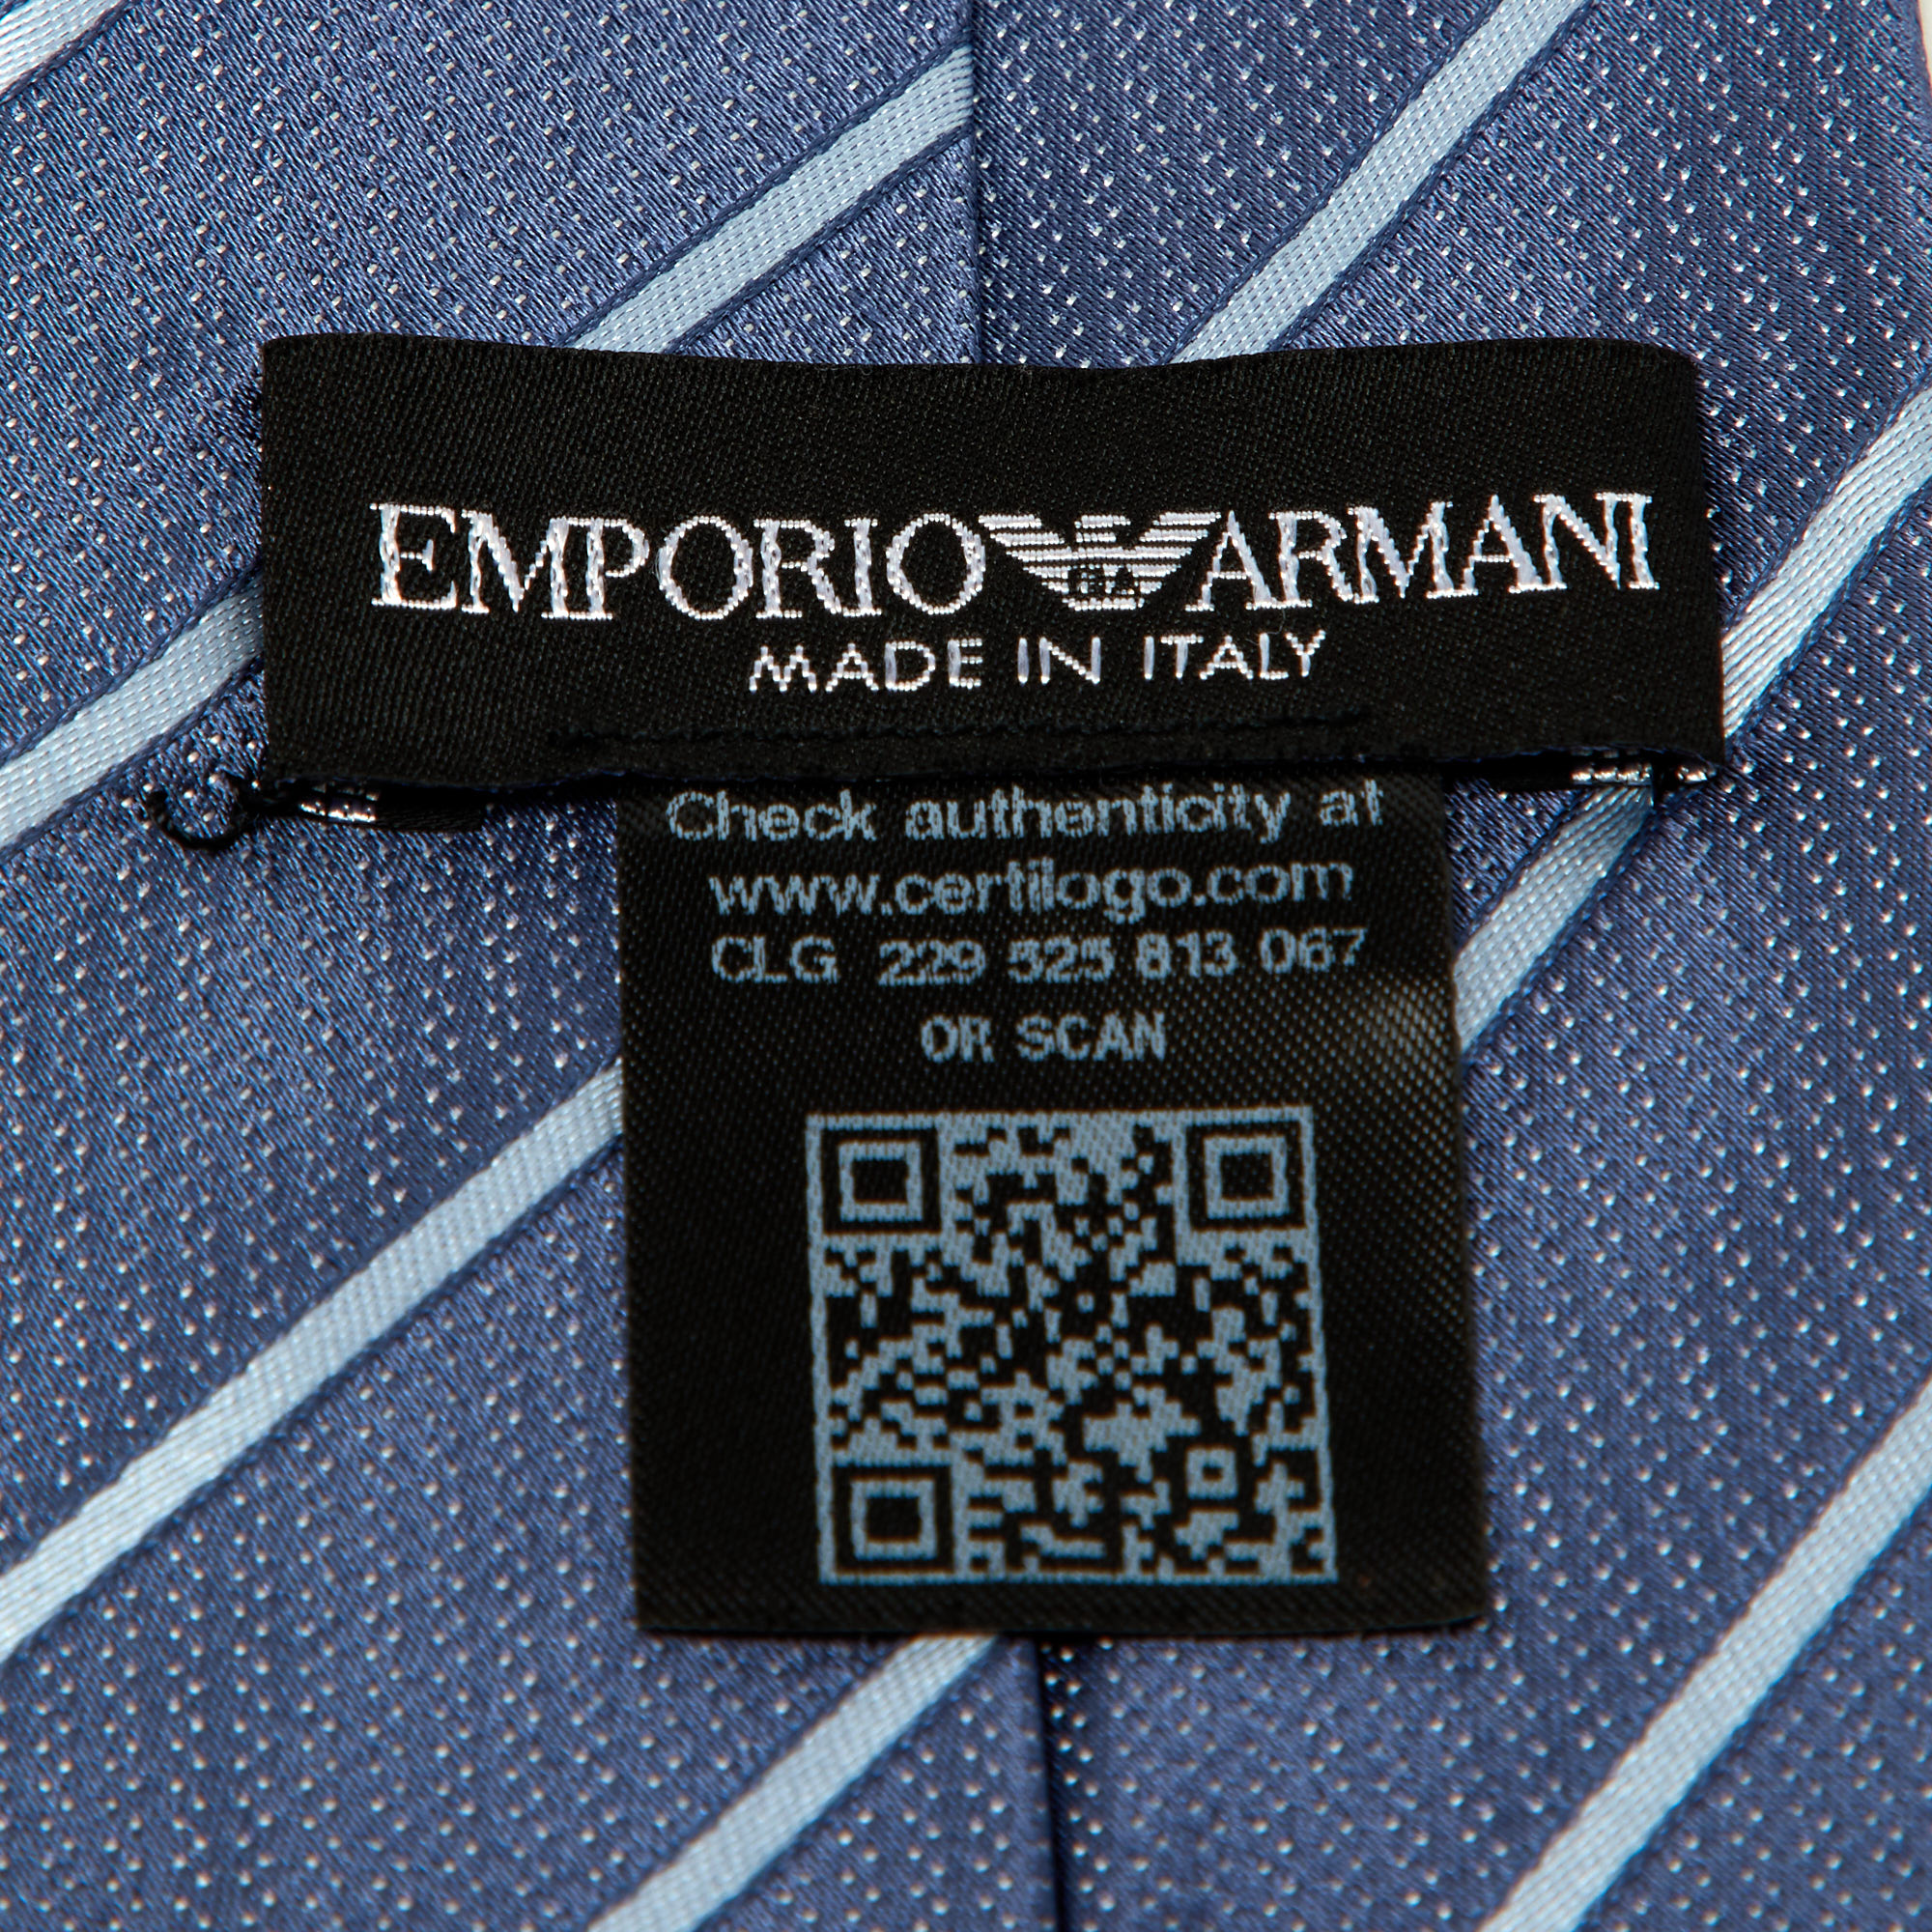 Emporio Armani Blue Diagonal Striped Silk Tie